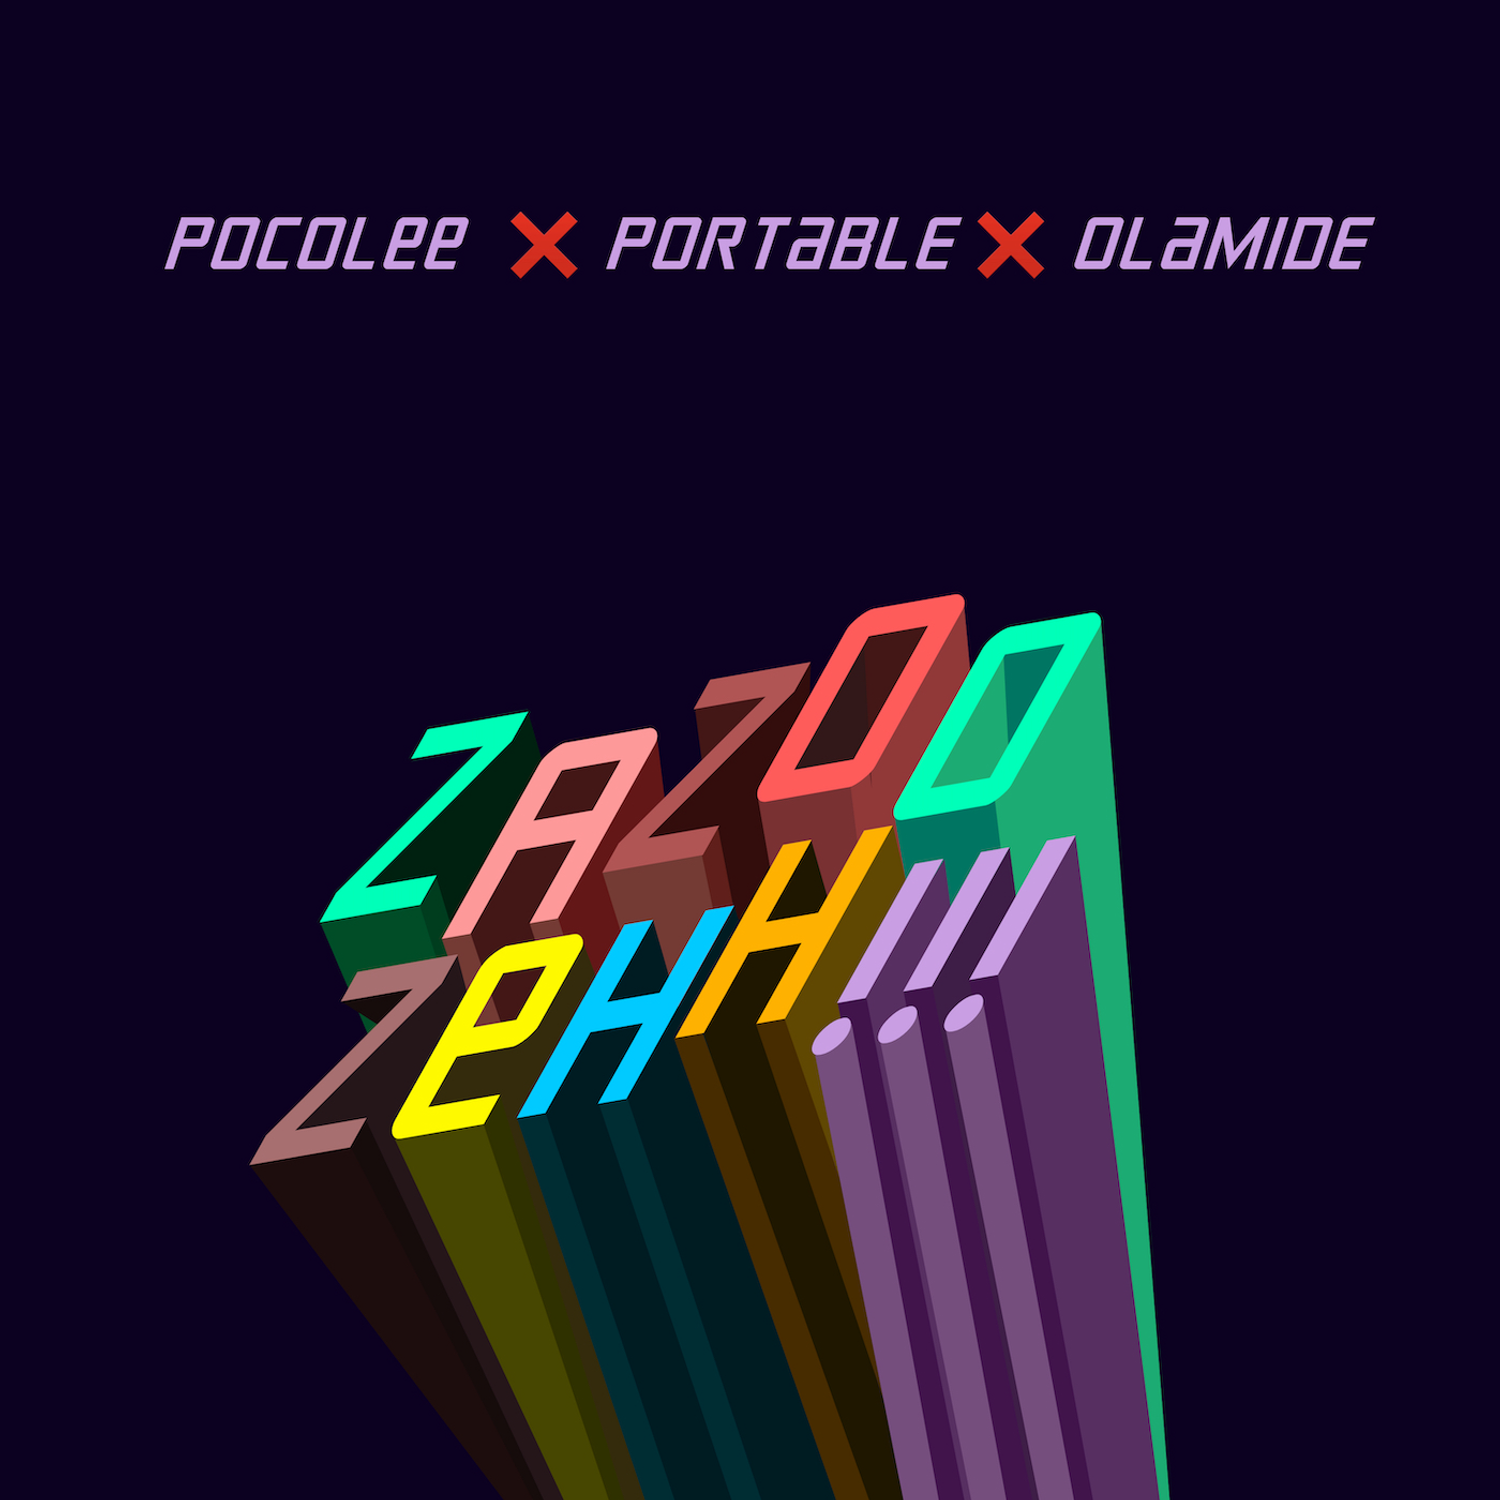 Download Music: Poco Lee x Portable x Olamide – “ZaZoo Zehh”